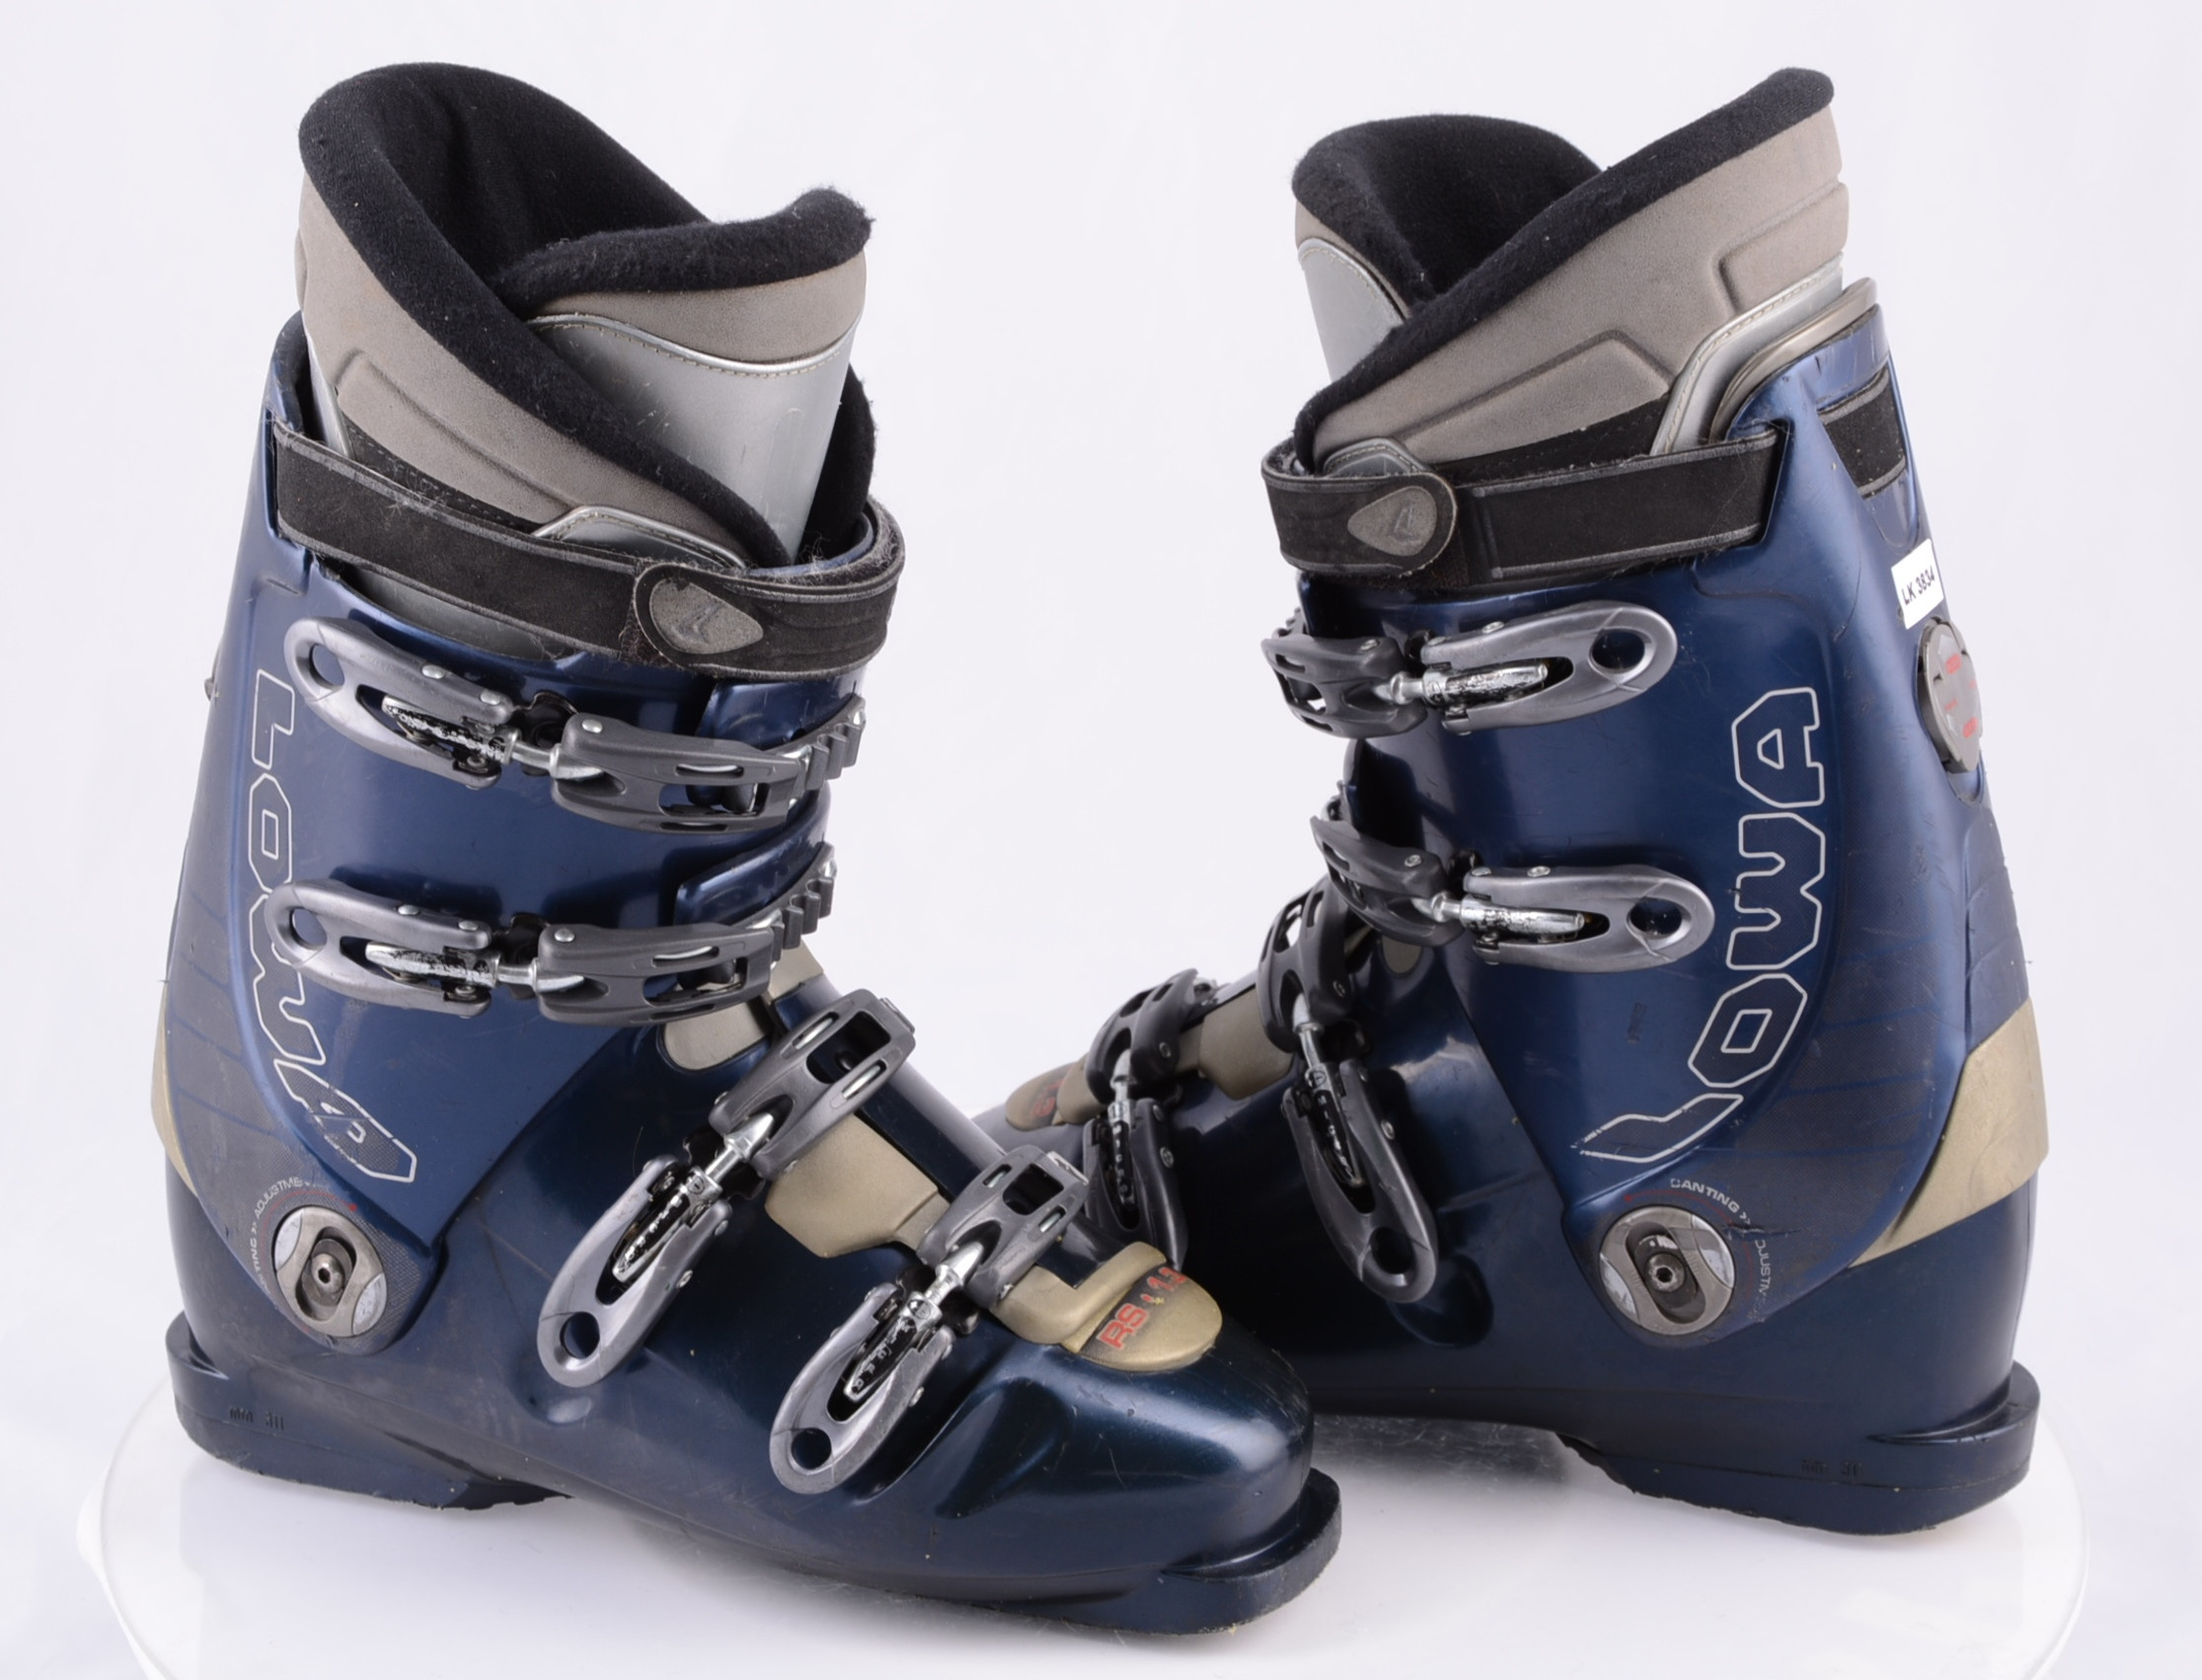 ski boots LOWA RS 1.3 BLUE, FLEX macro, micro, - Mardosport.com